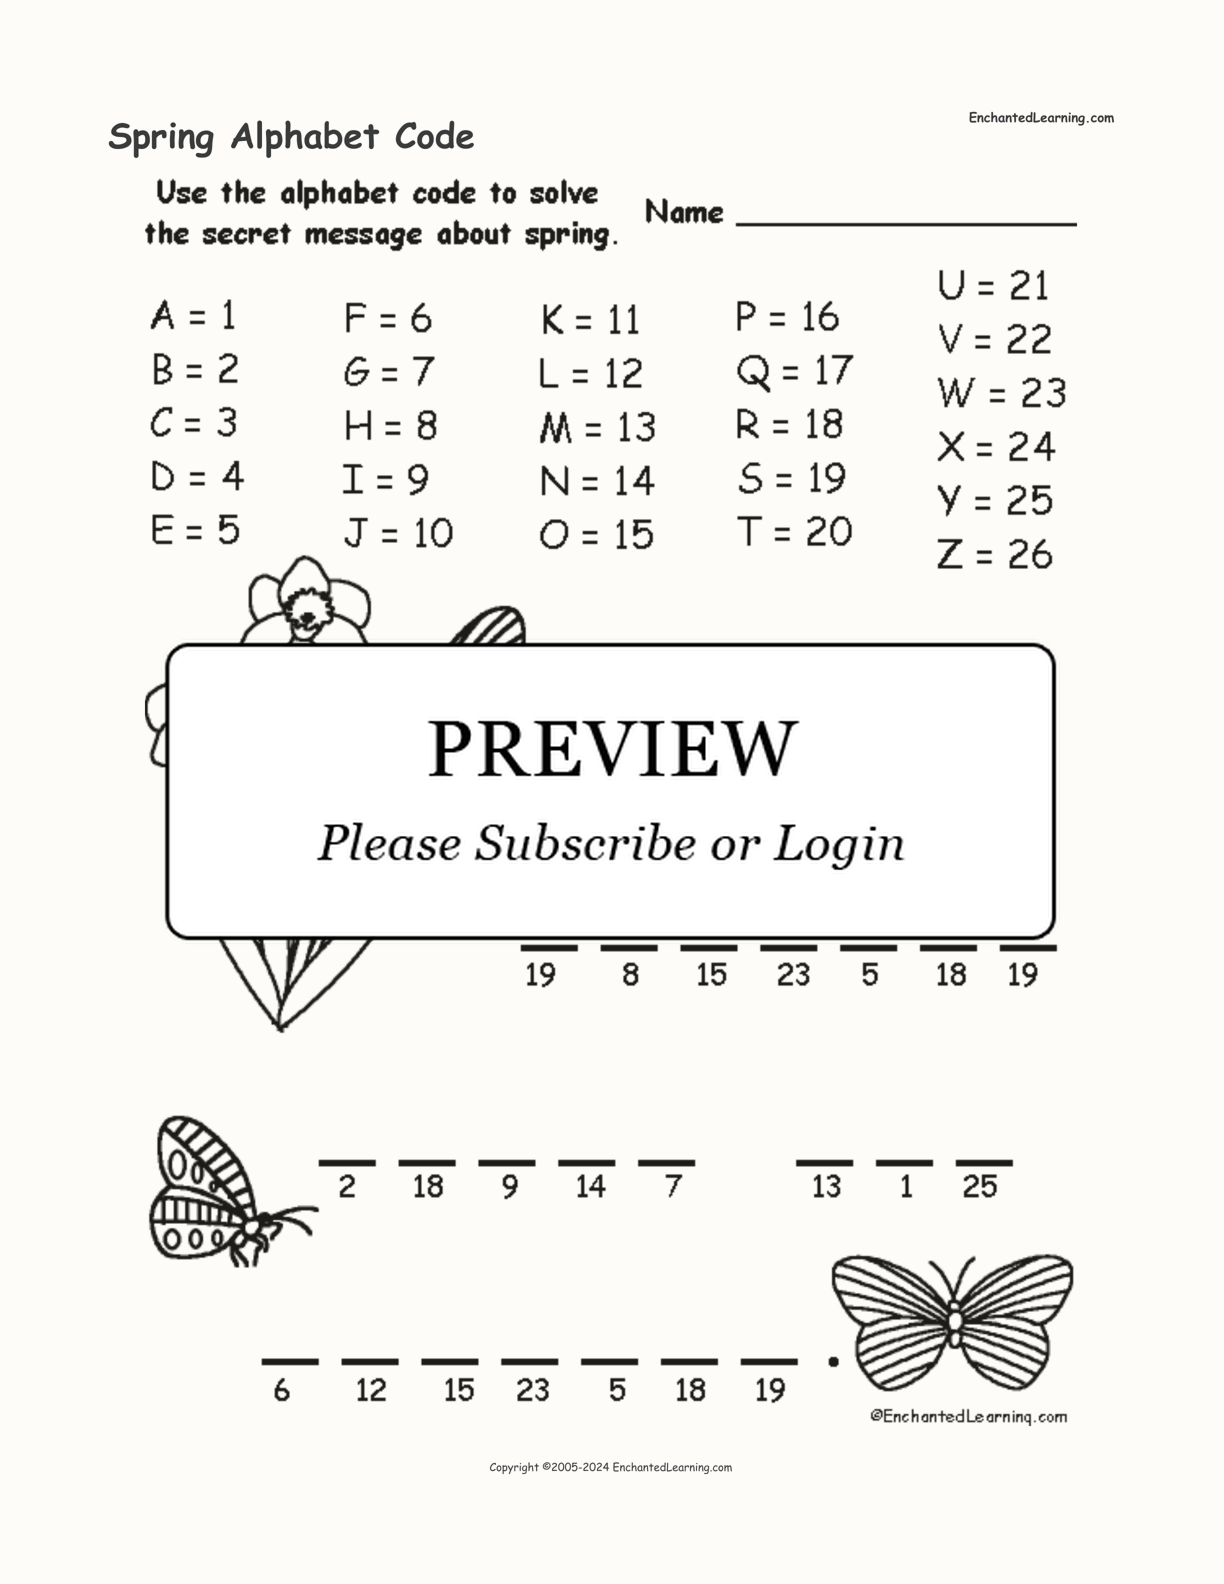 Spring Alphabet Code interactive worksheet page 1